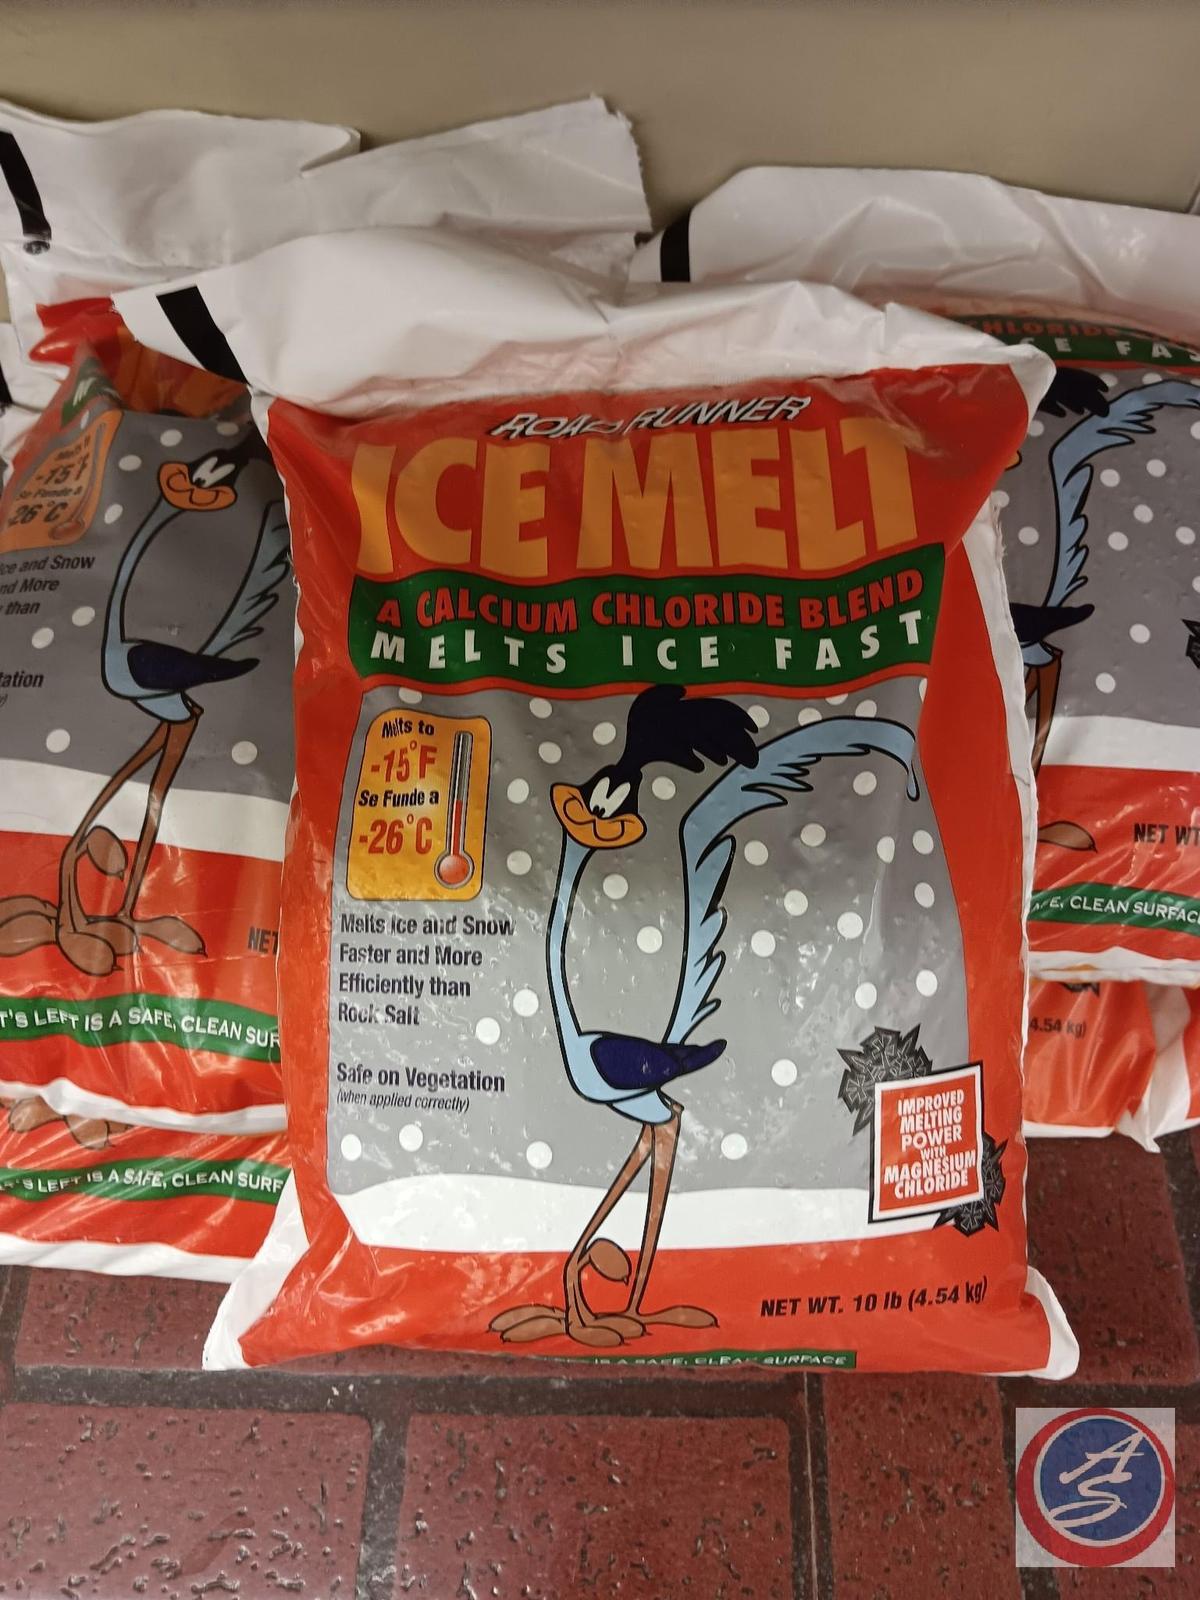 Ice melt